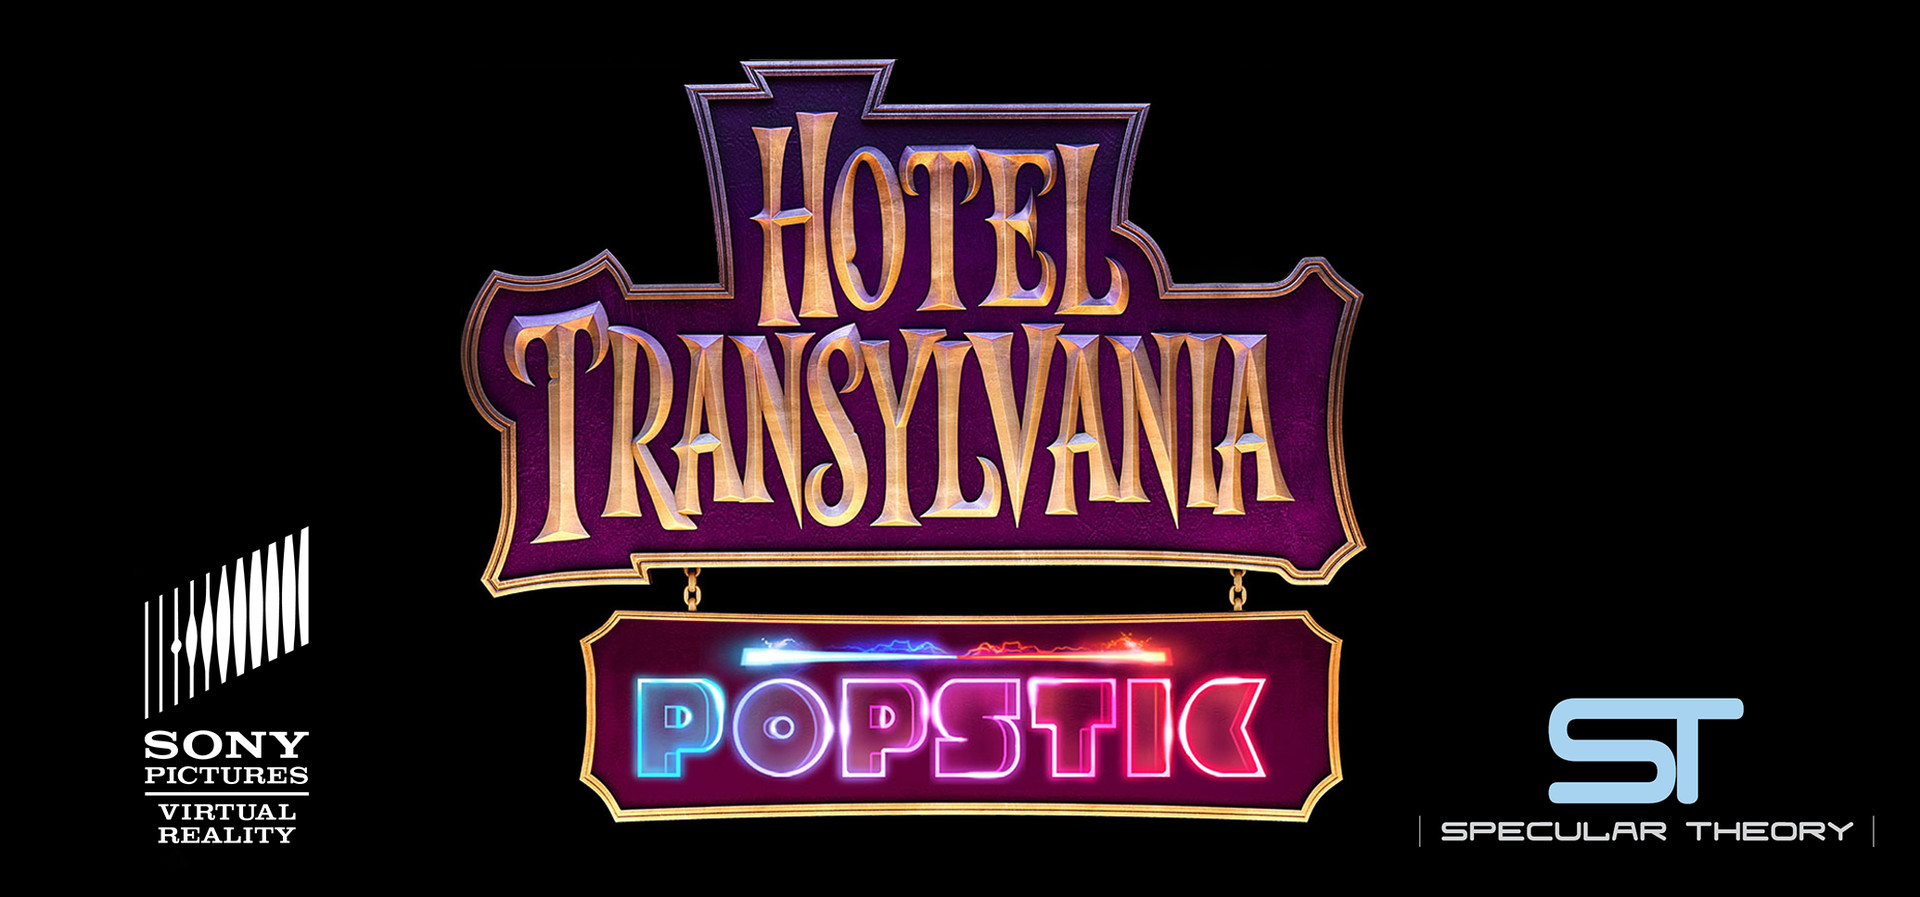 Hotel Transylvania Popstic Free Download